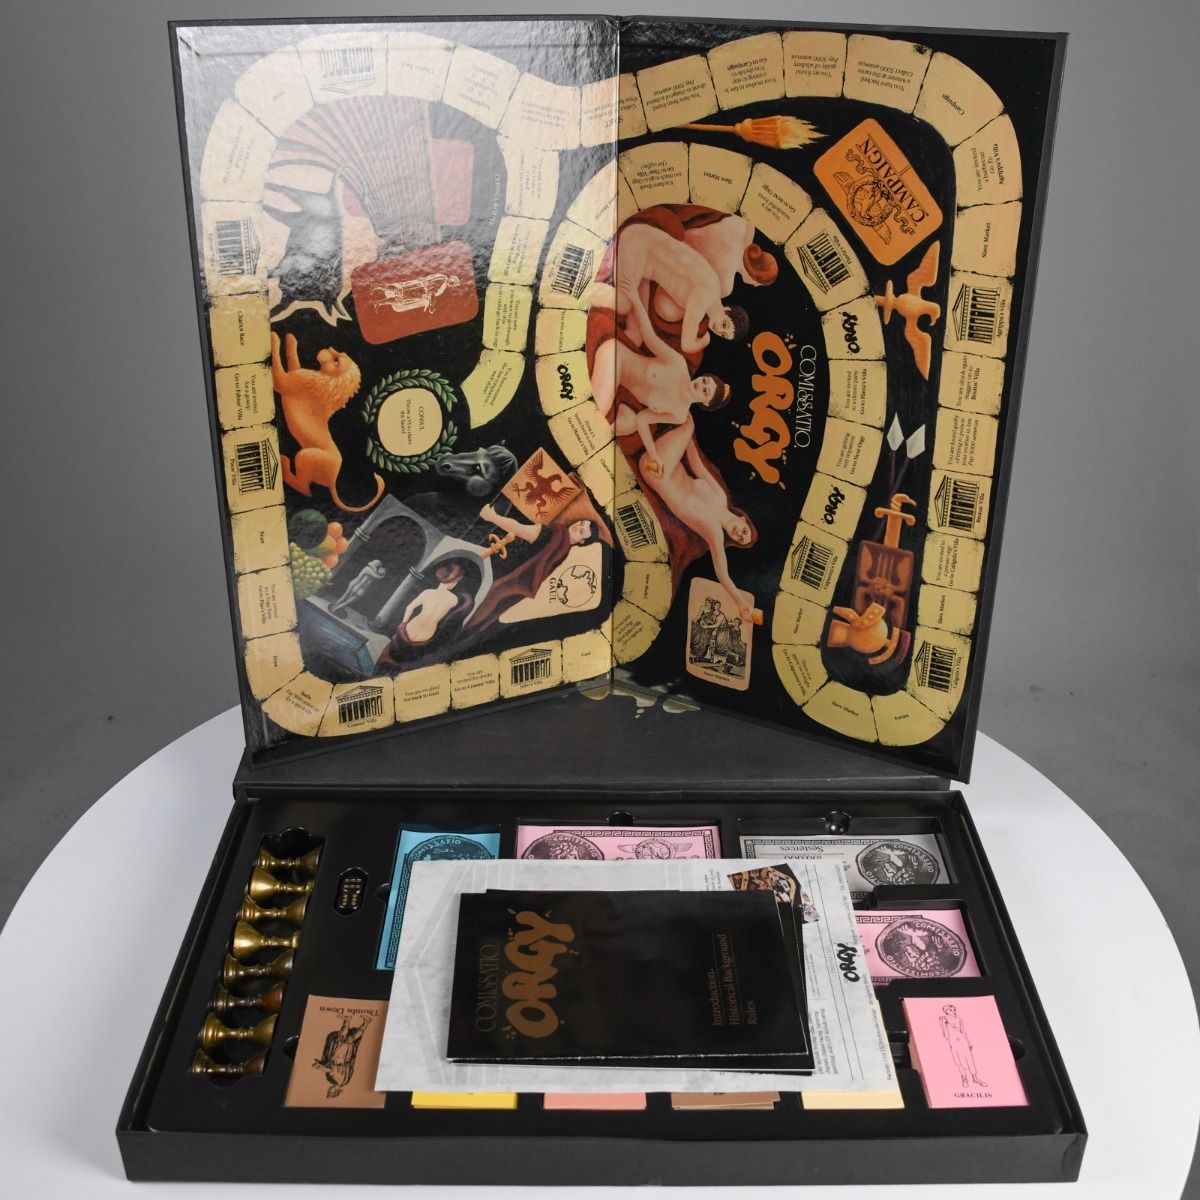 'Commisatio Orgy' 1986 Board Game